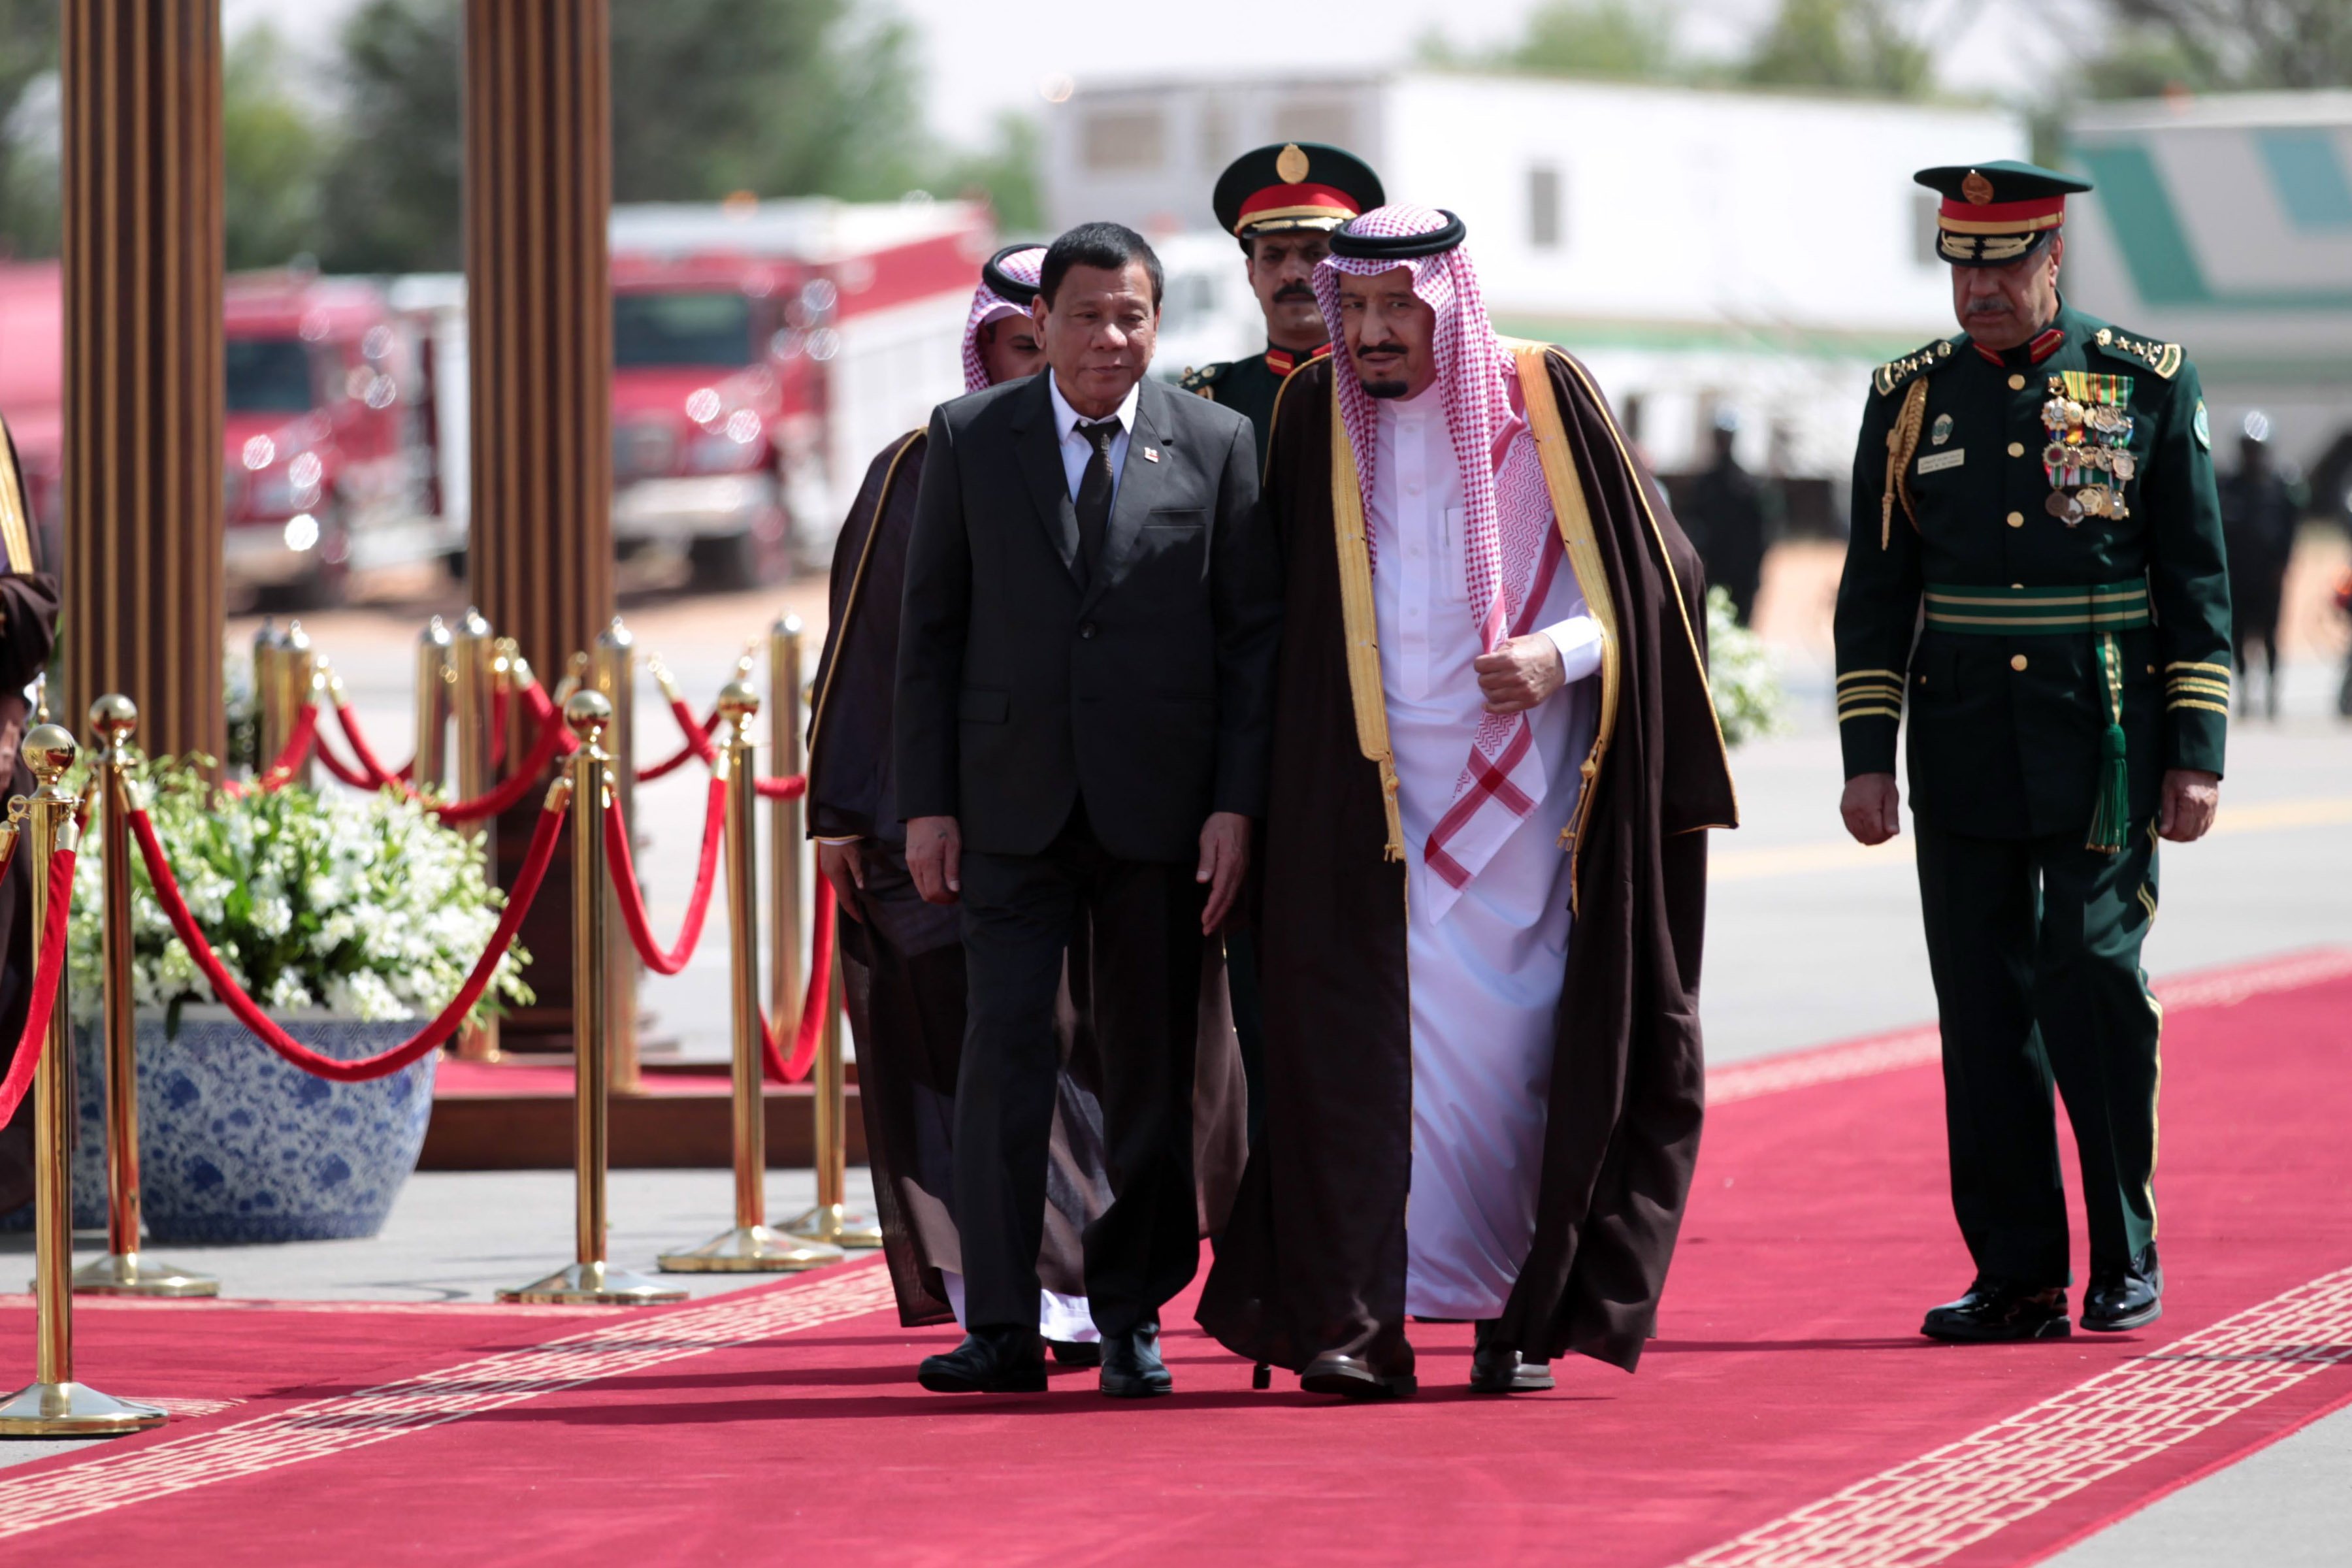 President Duterte is accompanied by King Salman bin Abdulaziz Al Saud